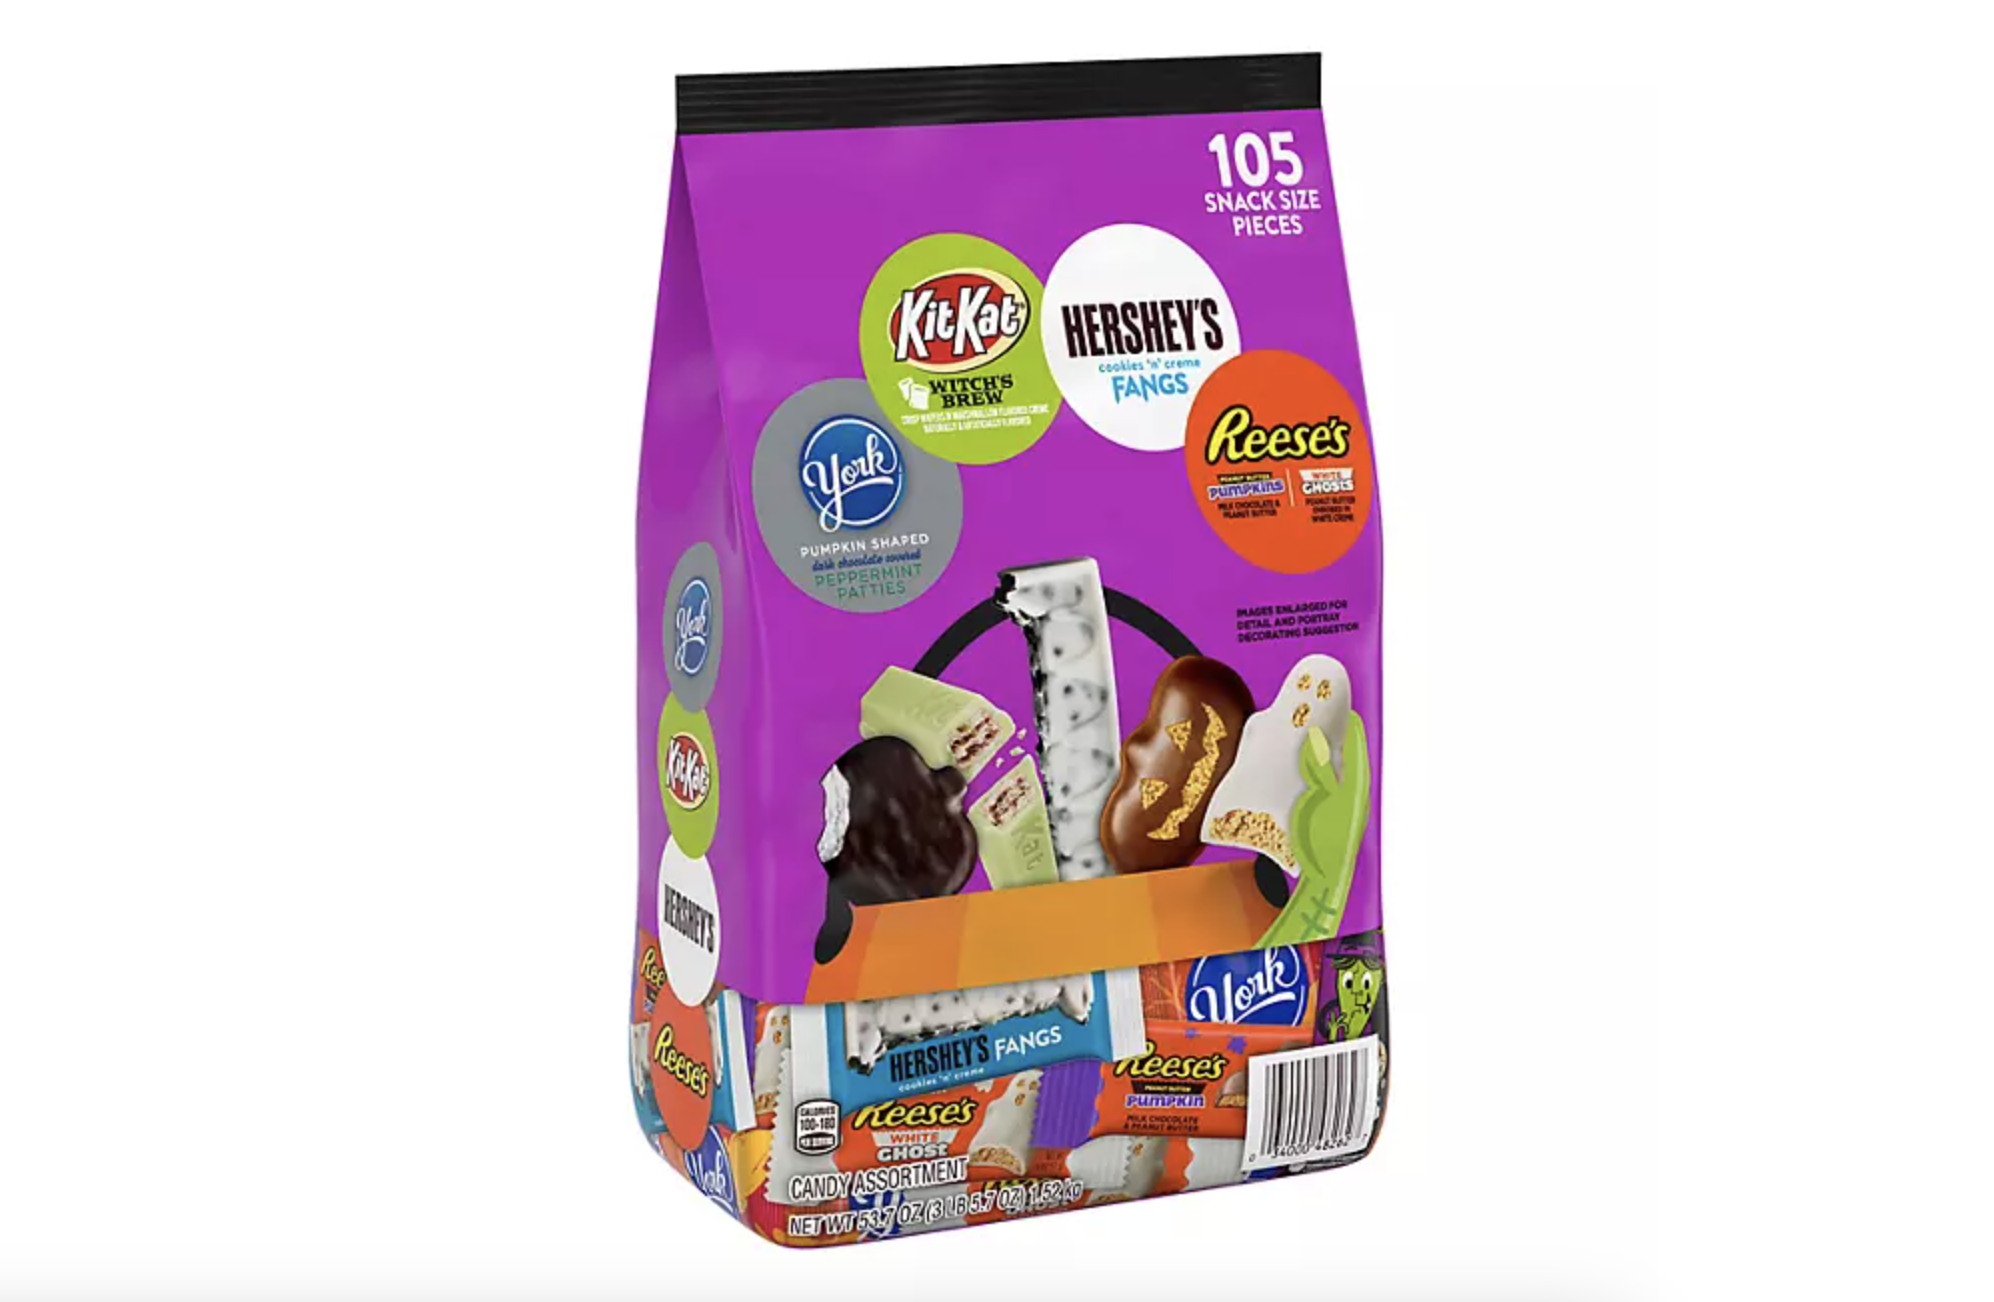 Mars Mixed Chocolate Halloween Candy Bag, 350 ct - King Soopers